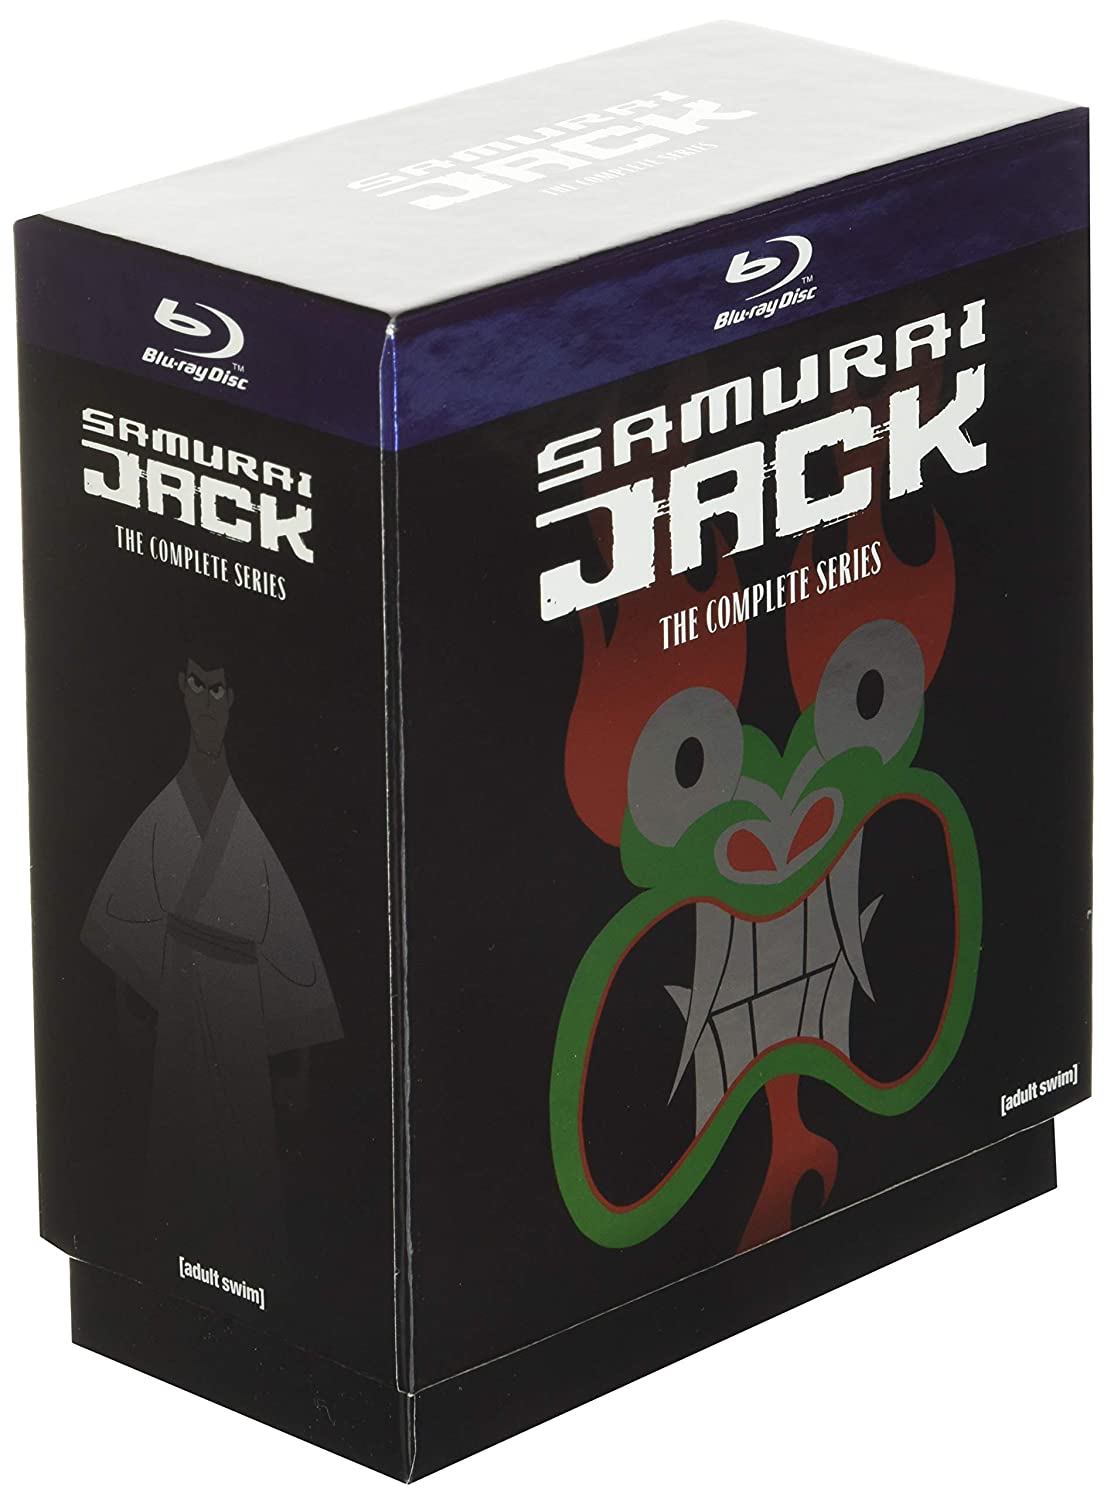 Samurai Jack: The Complete Series (Blu-ray) $41.97 + Free Shipping @ Amazon